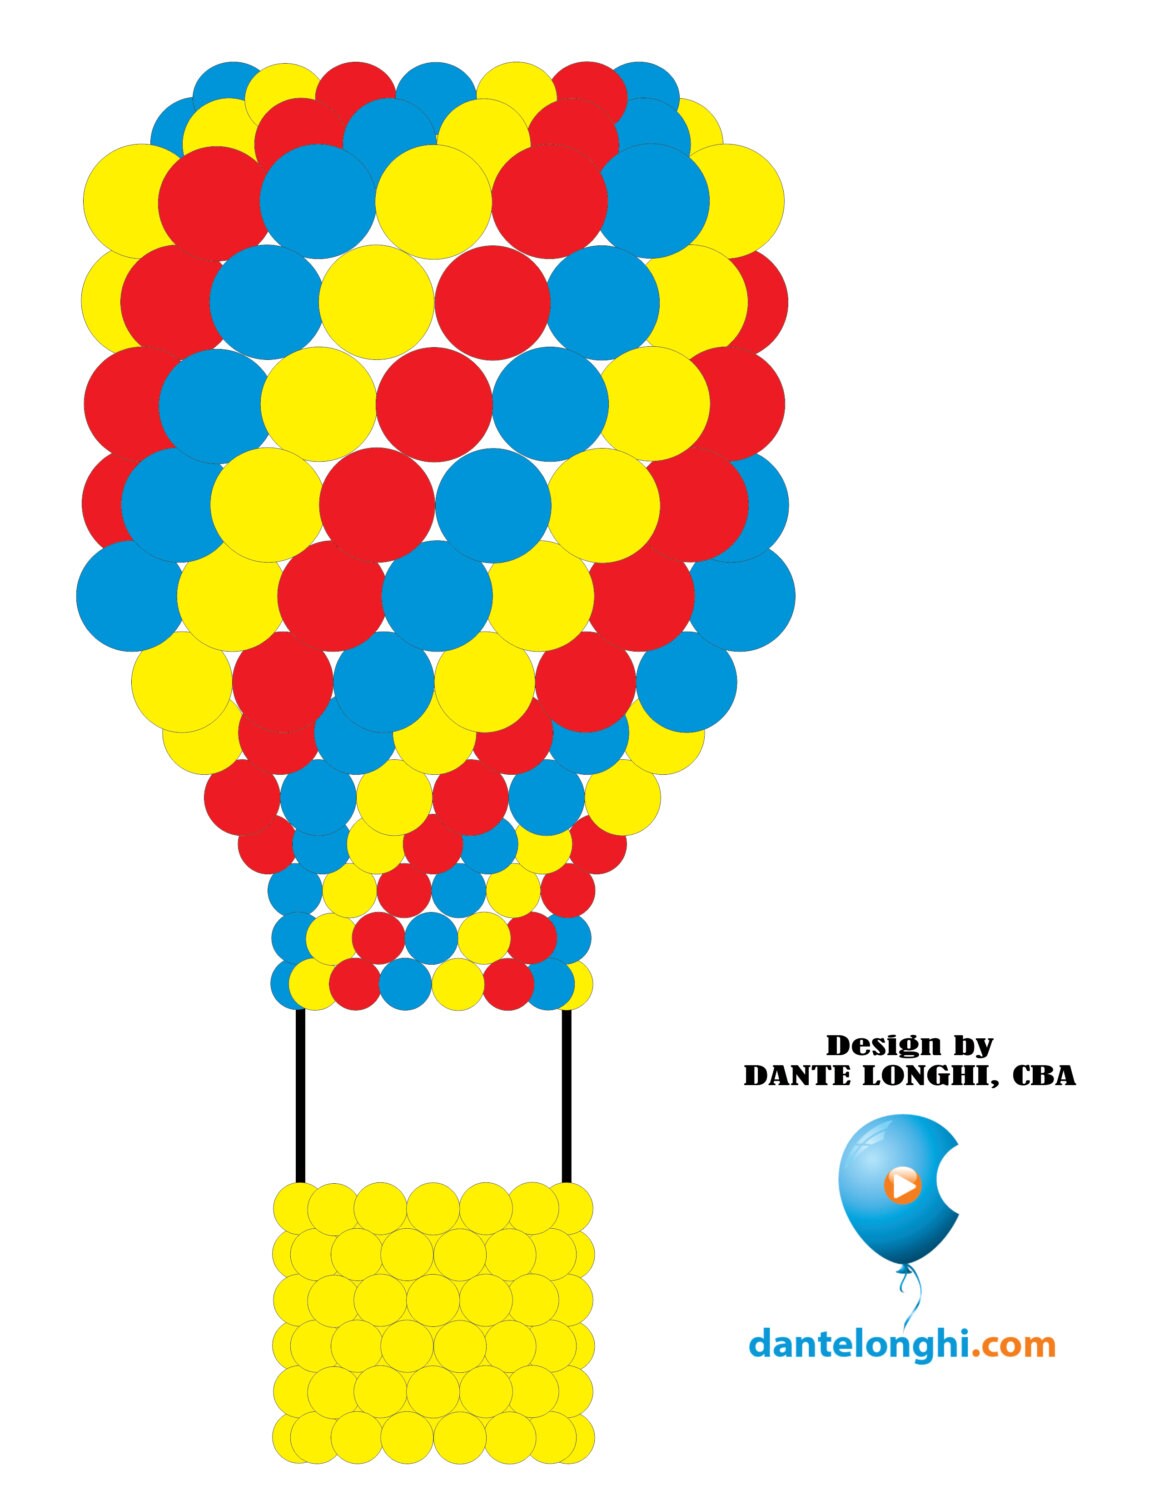 SentoSphere USA Art & Creations 3D Art - Hot-Air Balloons and